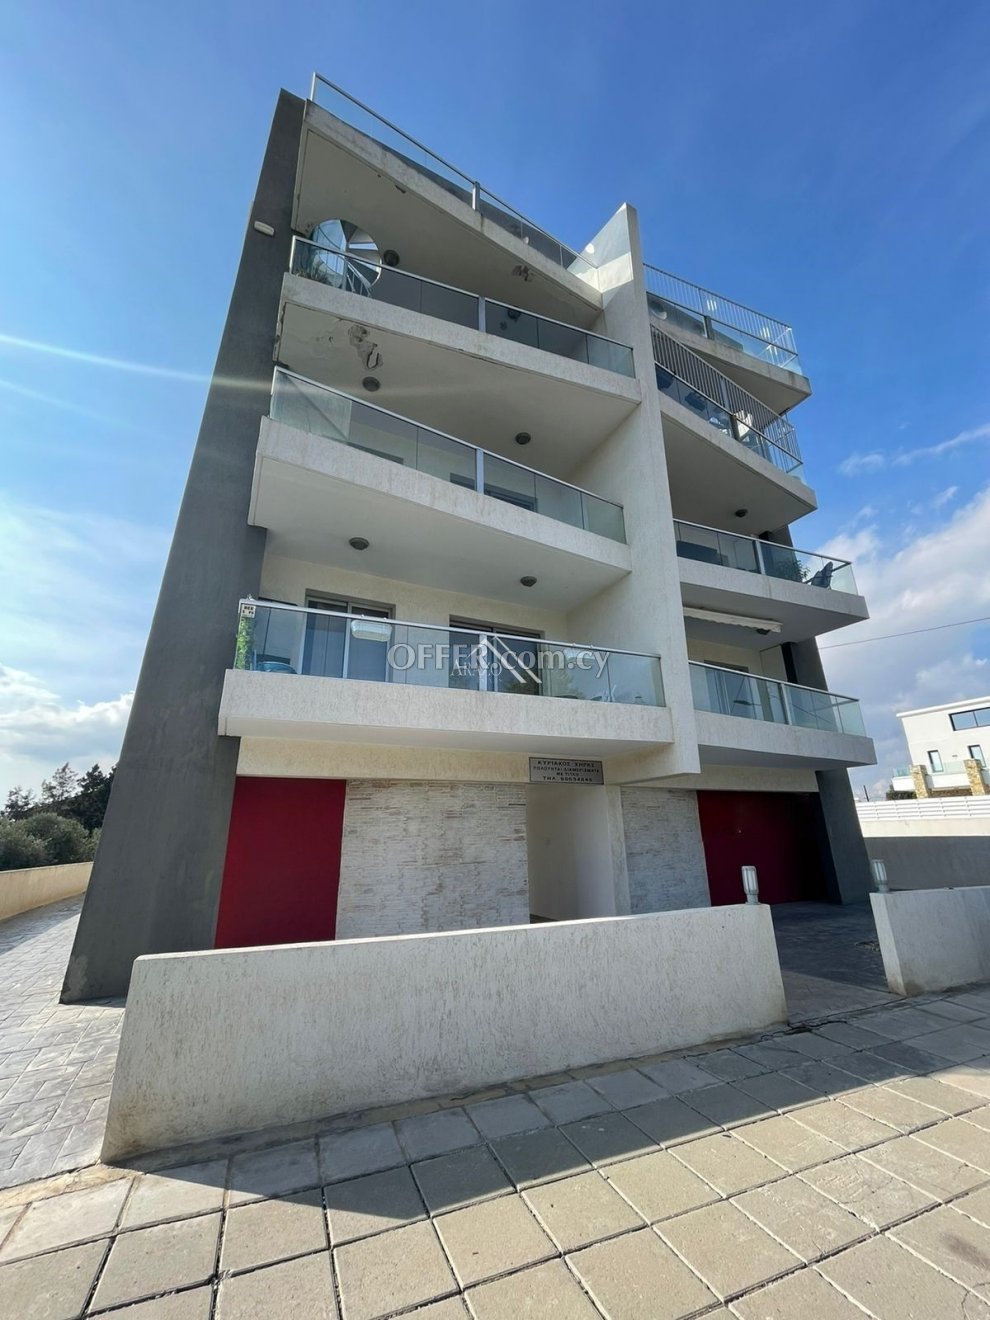 2 Bed Apartment For Rent in Krasa, Larnaca - 9